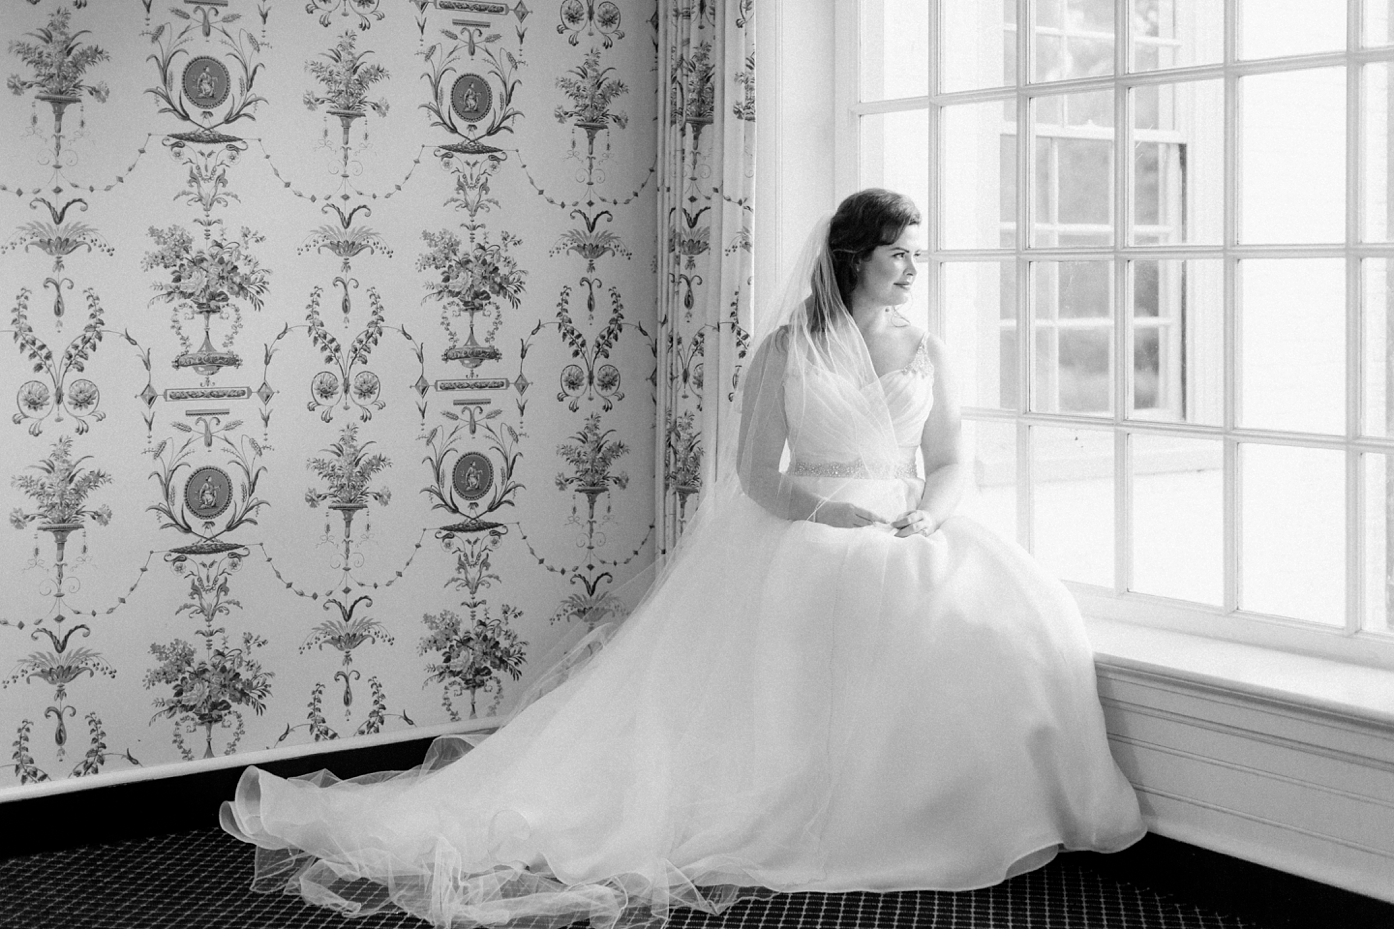 Williamsburg Inn Bridal Portrait Session by Alisandra Photography